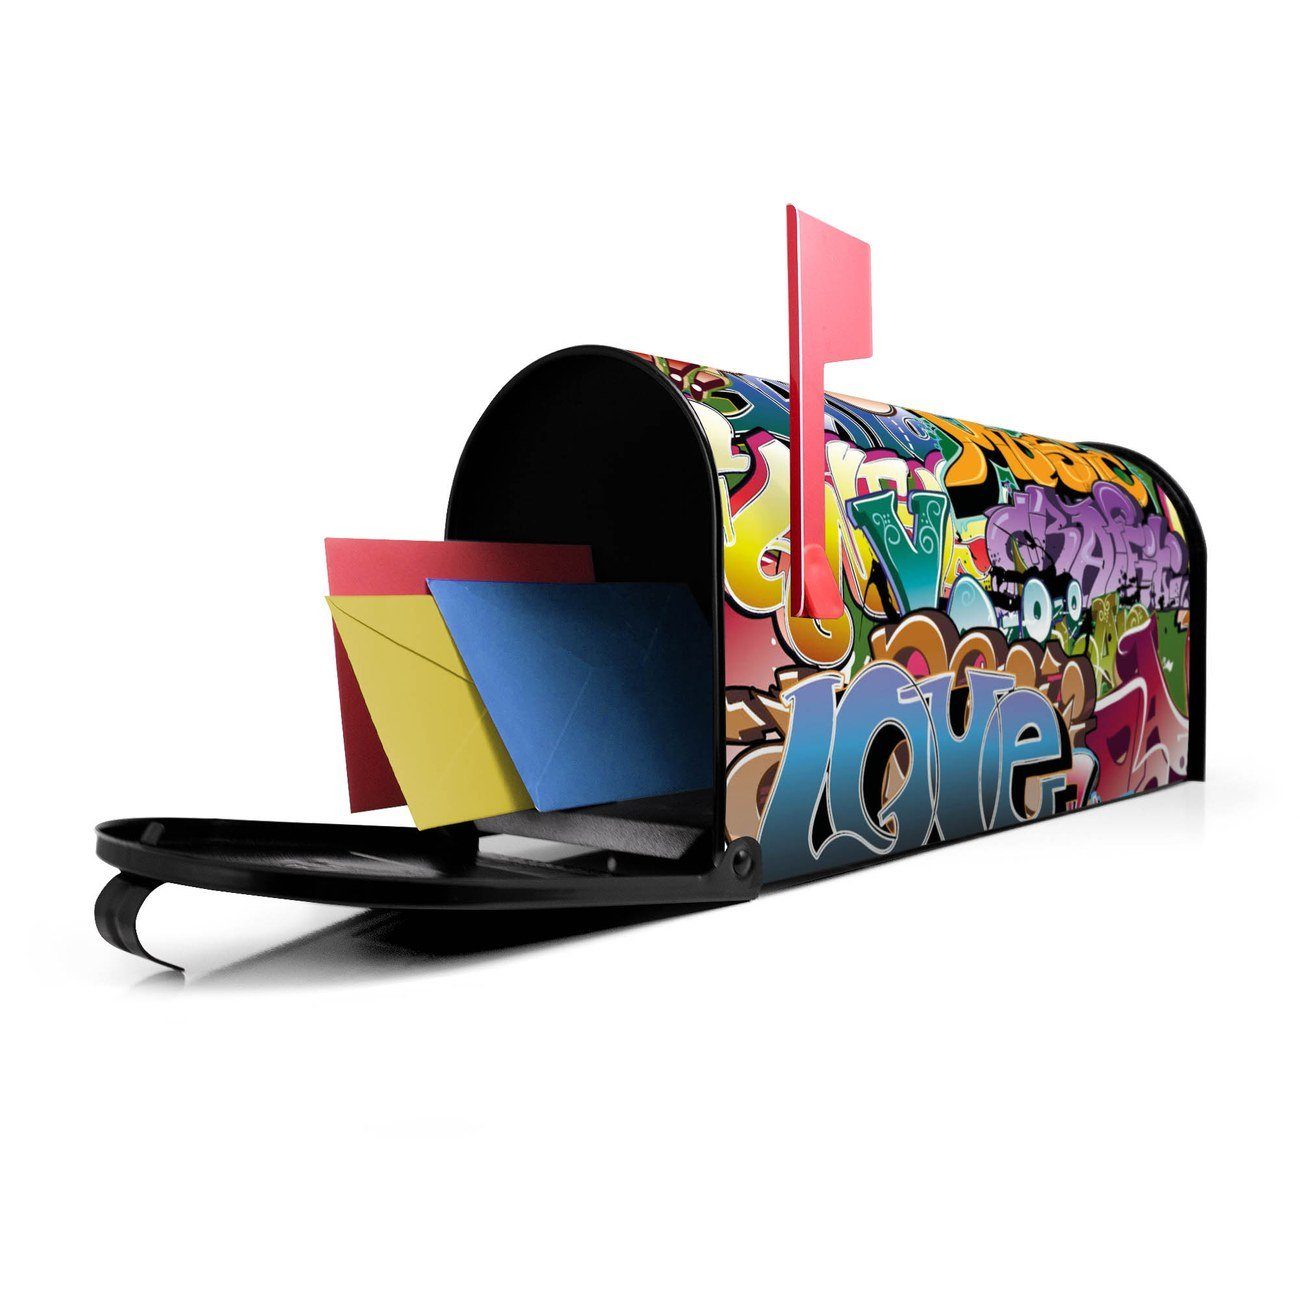 (Amerikanischer Briefkasten, USA), x Graffiti schwarz Mississippi 22 51 Briefkasten Amerikanischer aus cm 17 banjado x original Mailbox